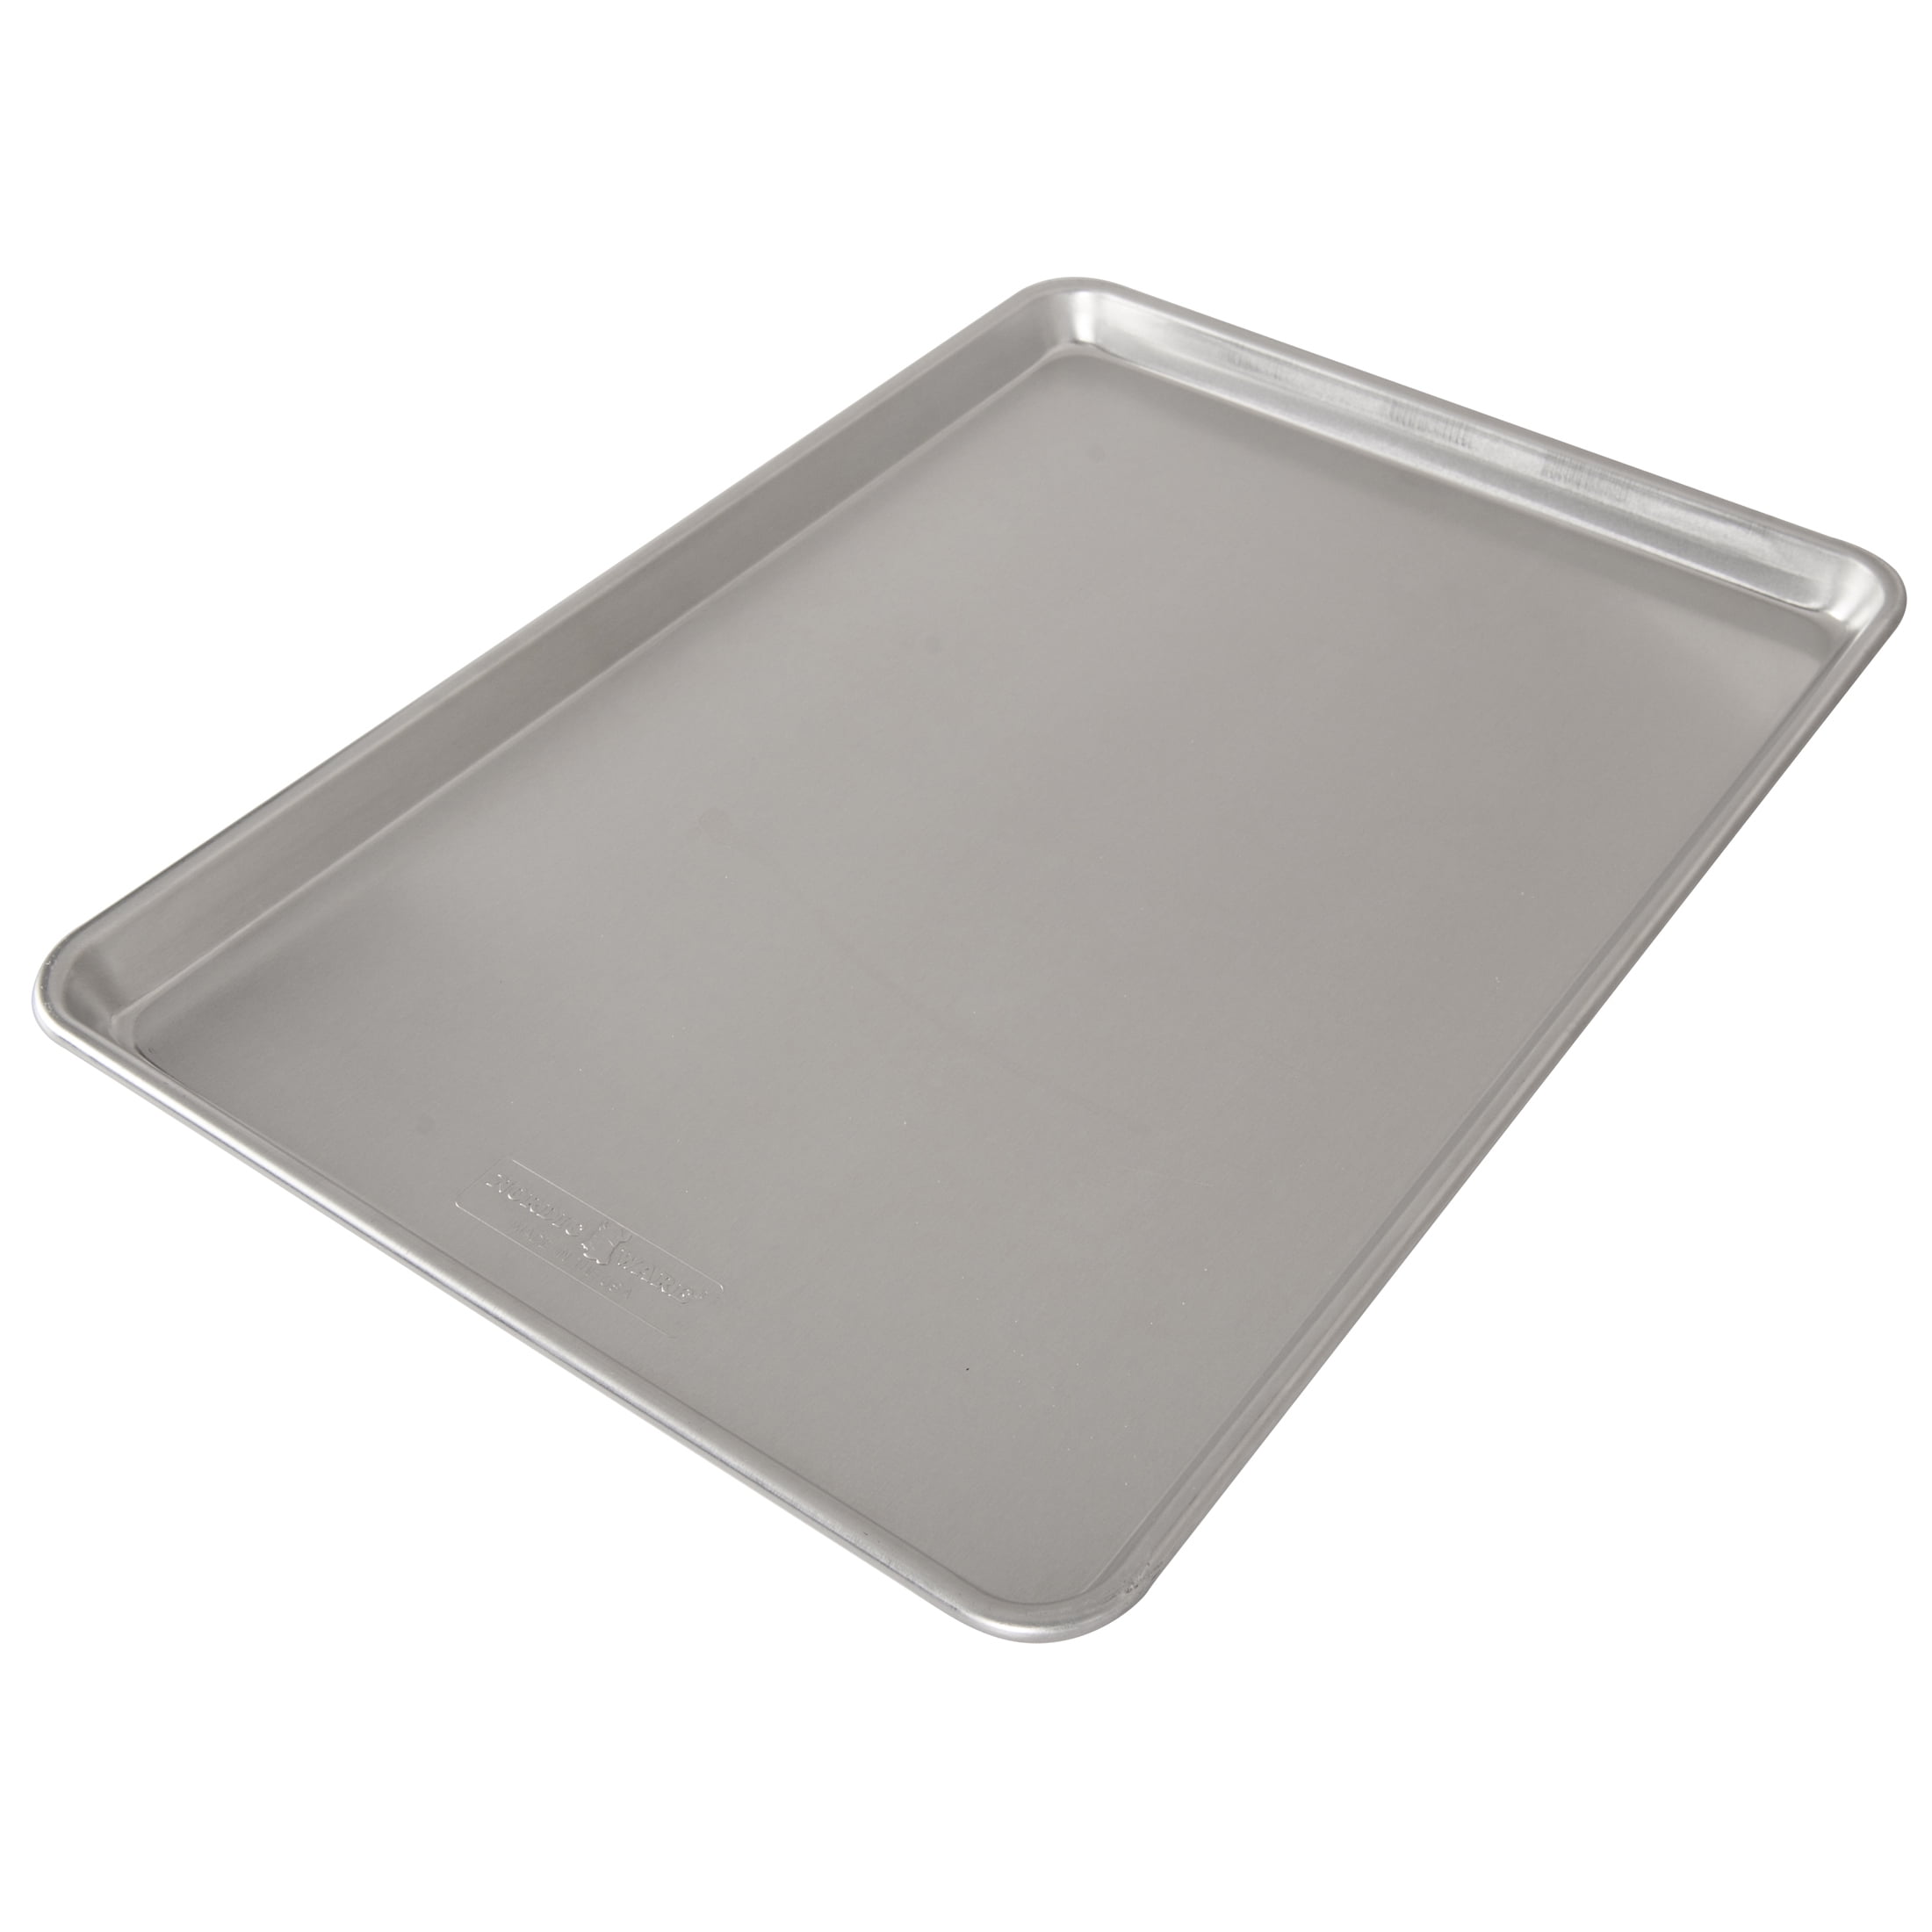 FSUON 6 Pack Big Size Baking Sheet Pan, Aluminum Commercial Cookie Sheet  Pan, Durable & Anti-Stick 15”x 21”